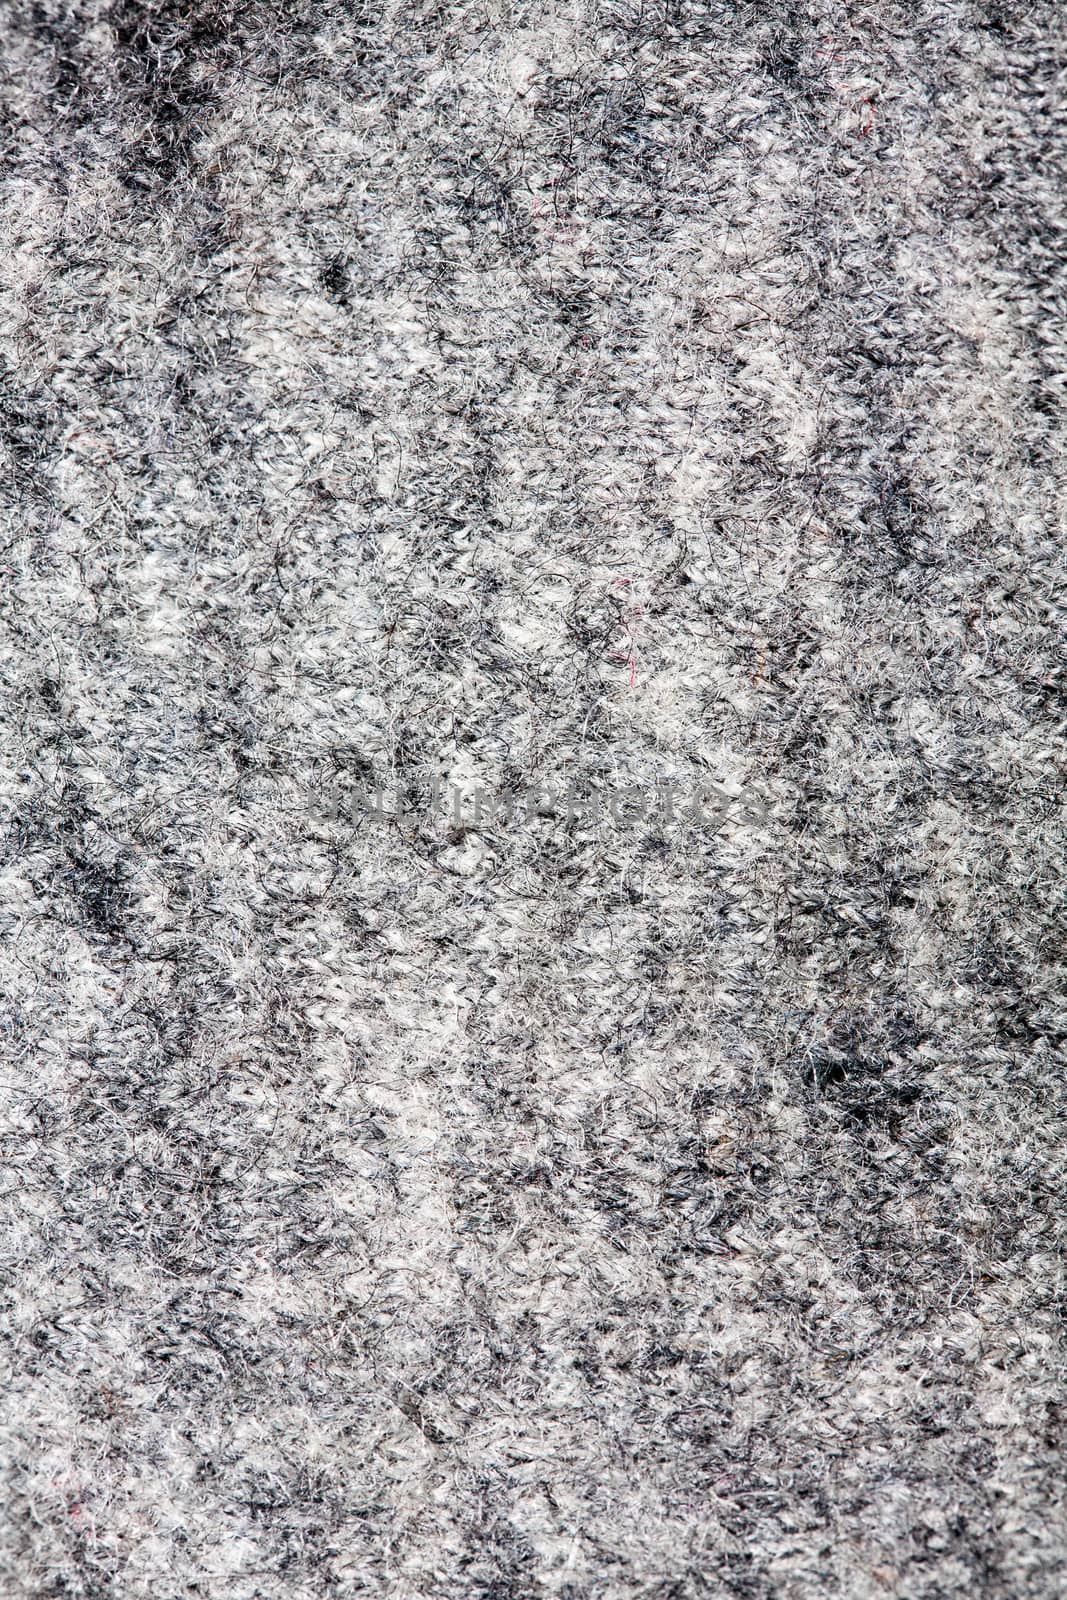 Seamless grey textile background with irregular pattern